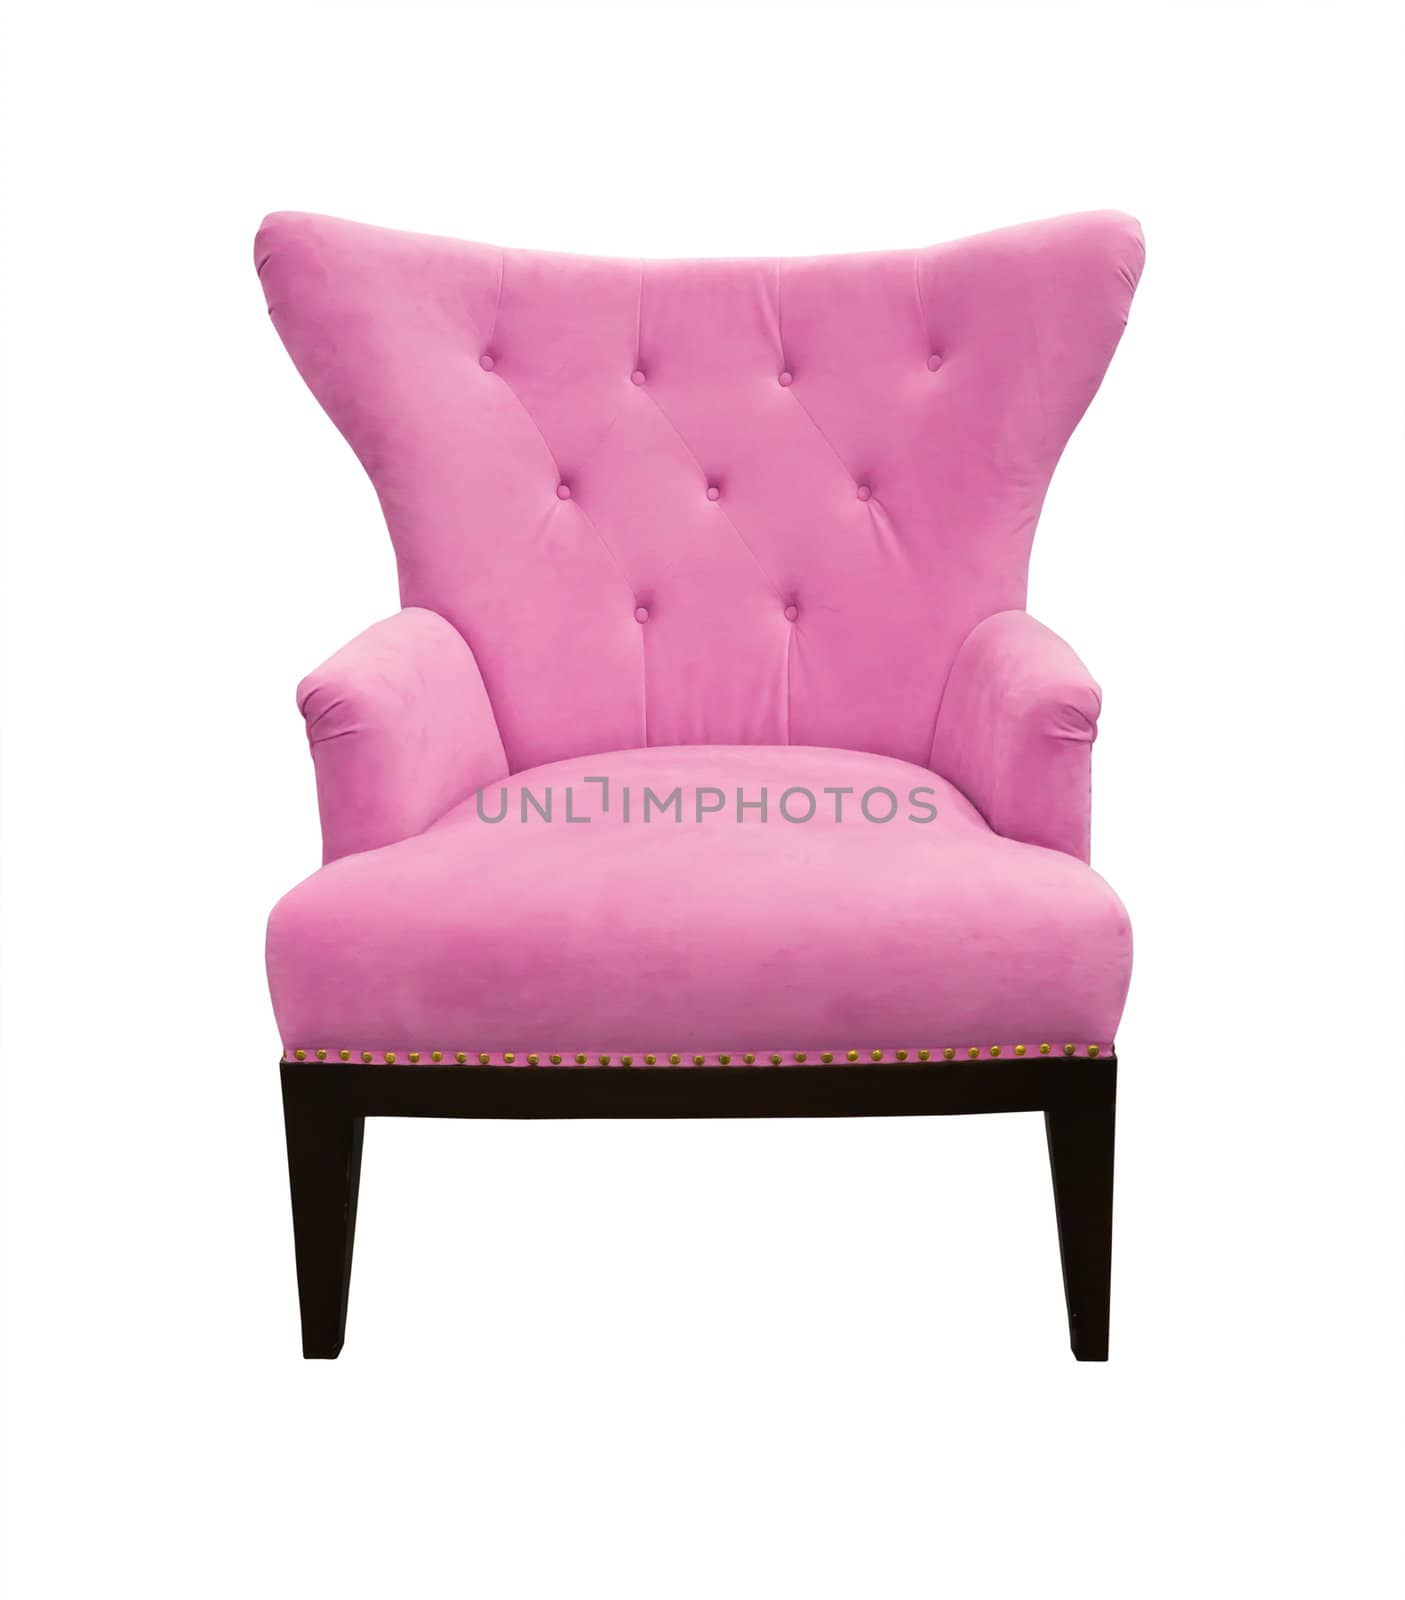 pink sofa isolated on white background